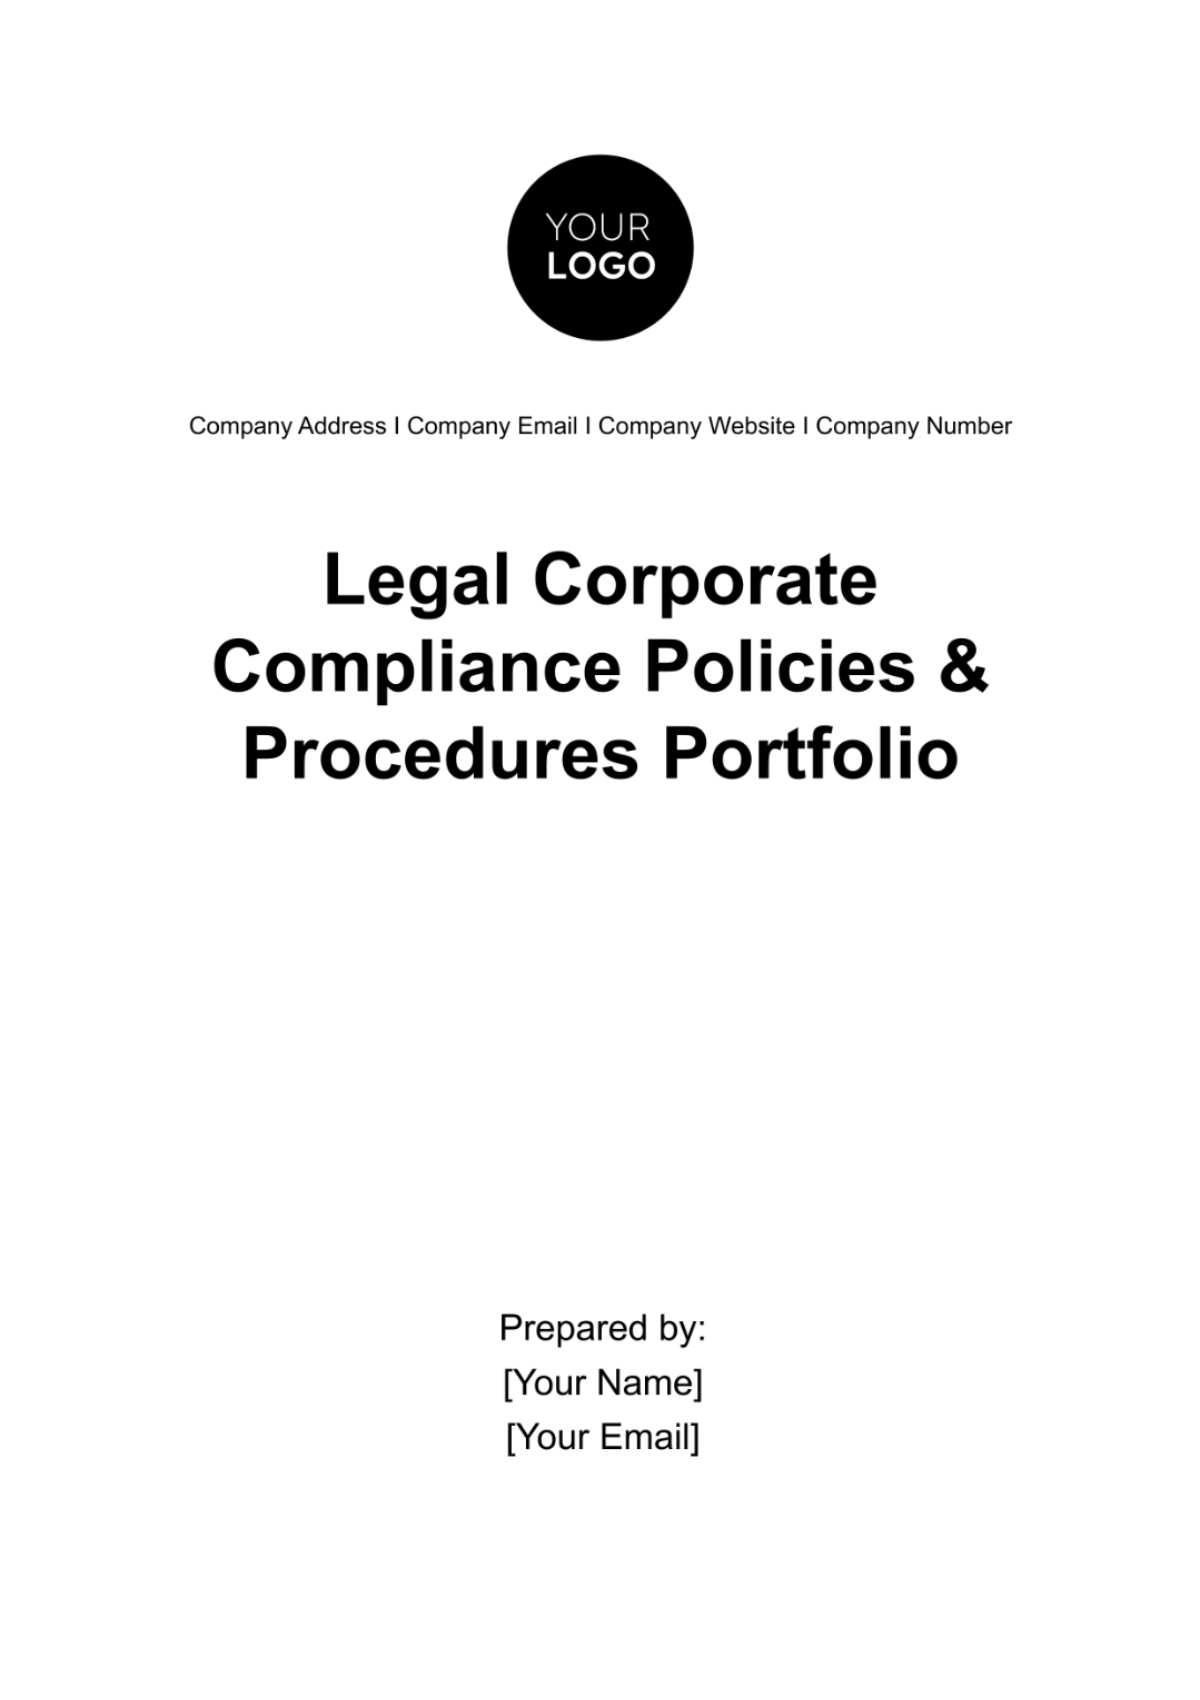 Free Legal Corporate Compliance Policies & Procedures Portfolio Template